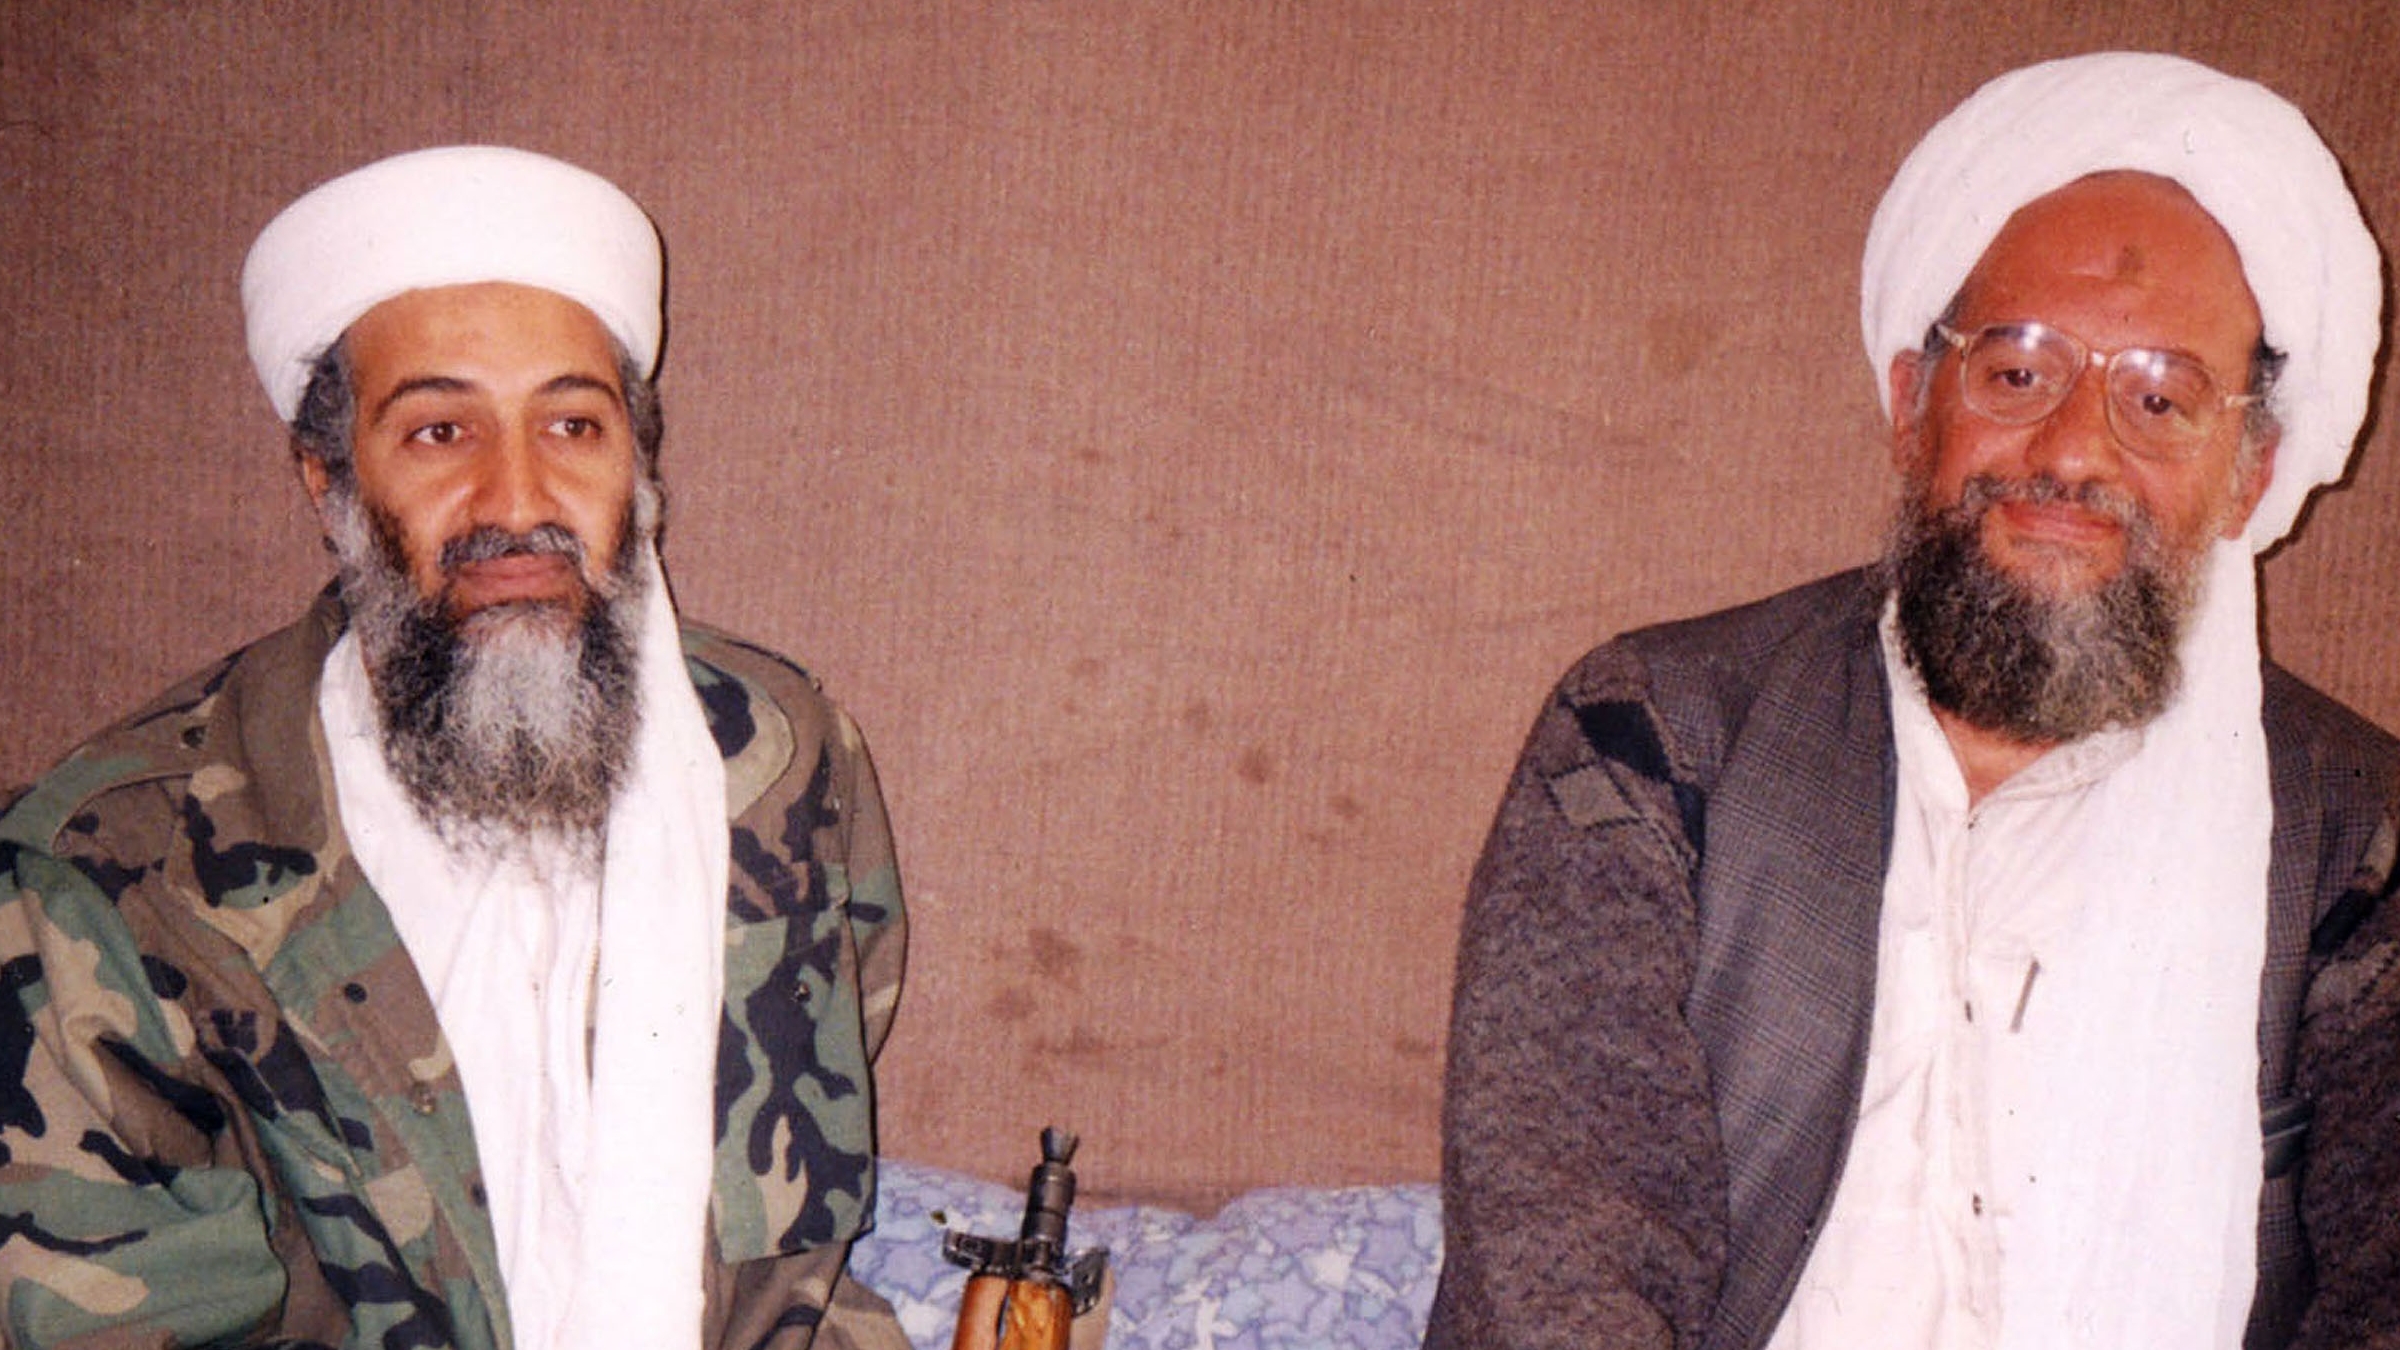 14-11-2001 Osama bin Laden y Ayman al Zawahiri
POLITICA ASIA AFGANISTÁN INTERNACIONAL
VISUAL NEWS
